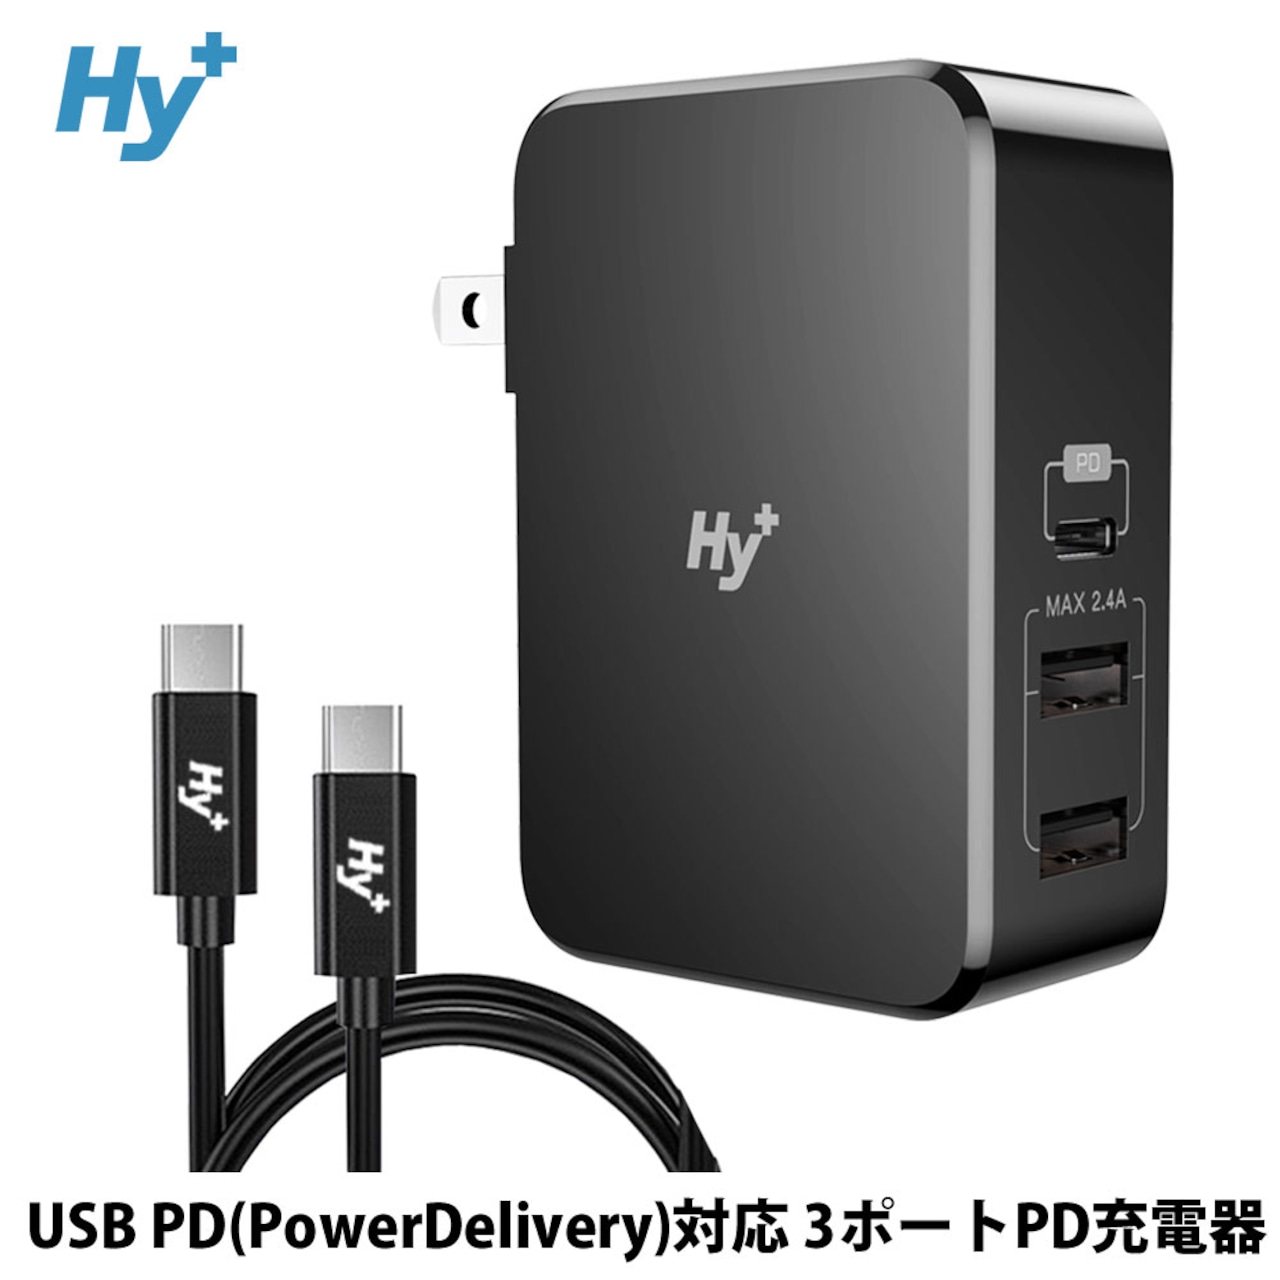 Hy+ USB PD(PowerDelivery)対応 3ポートPD充電器 USB Type-C 急速充電器 タイプC 折畳式プラグ Type-Cケーブル付属 PSE認証済 HY-PDUS45 ブラック